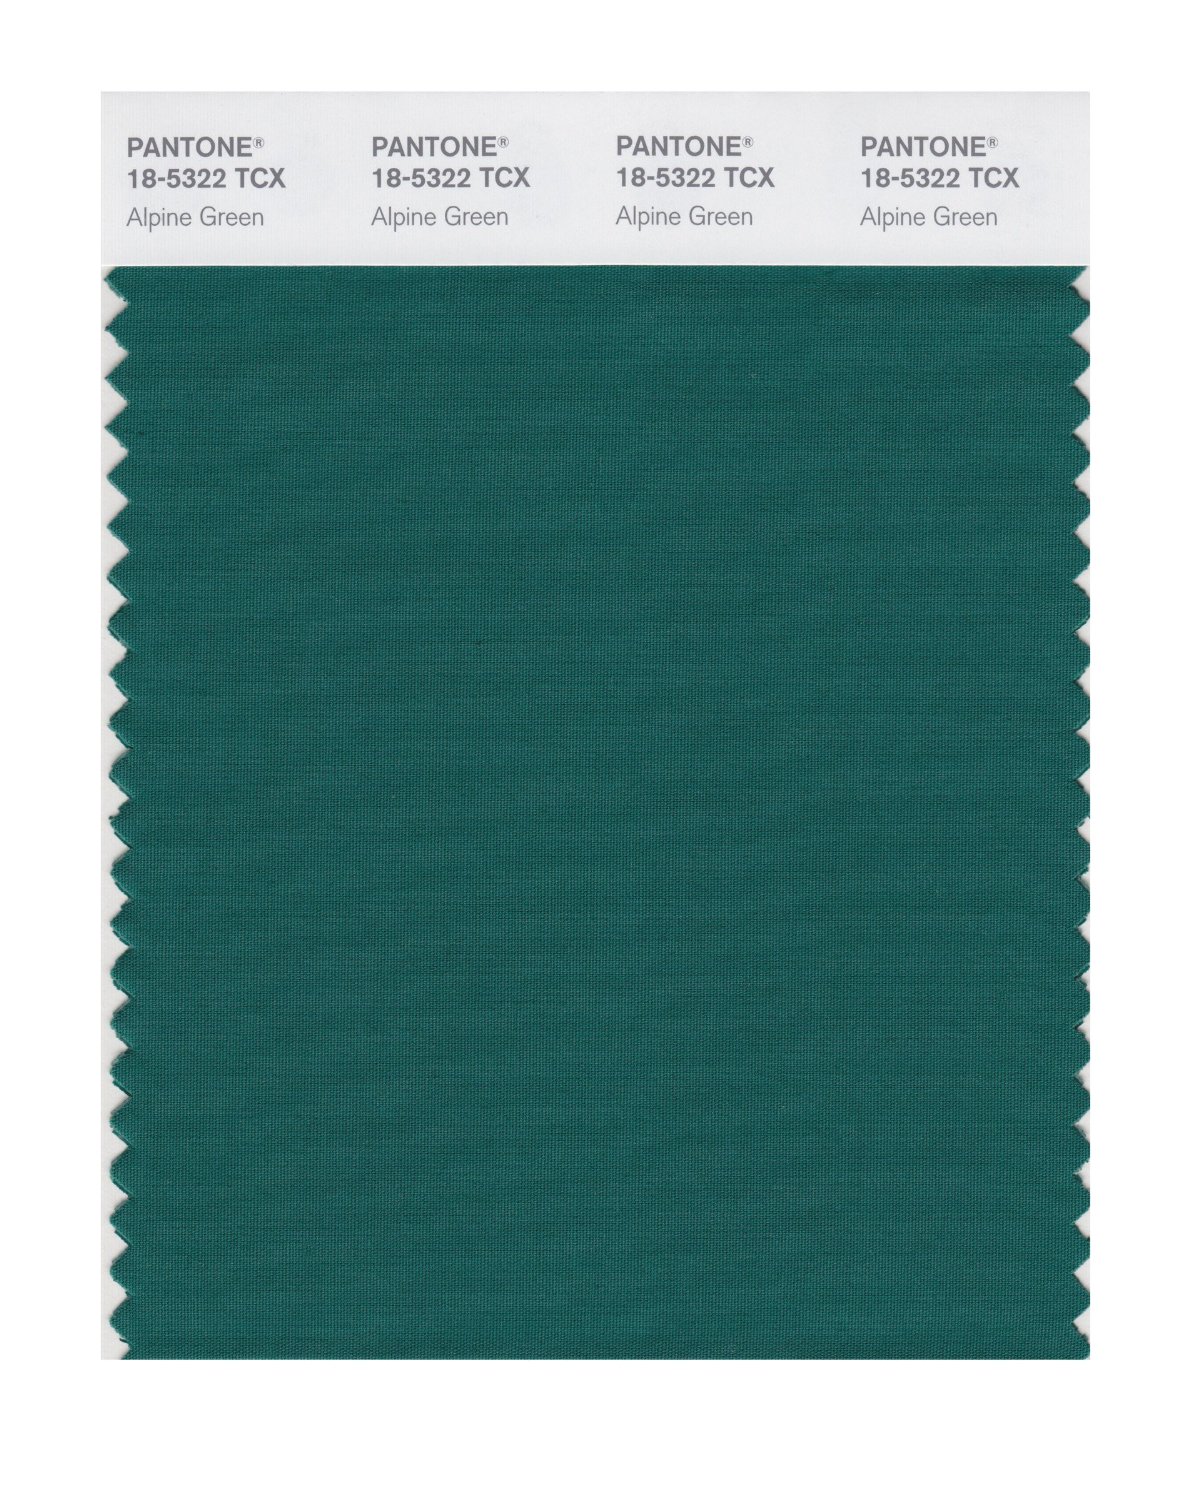 Pantone Cotton Swatch 18-5322 Alpine Green